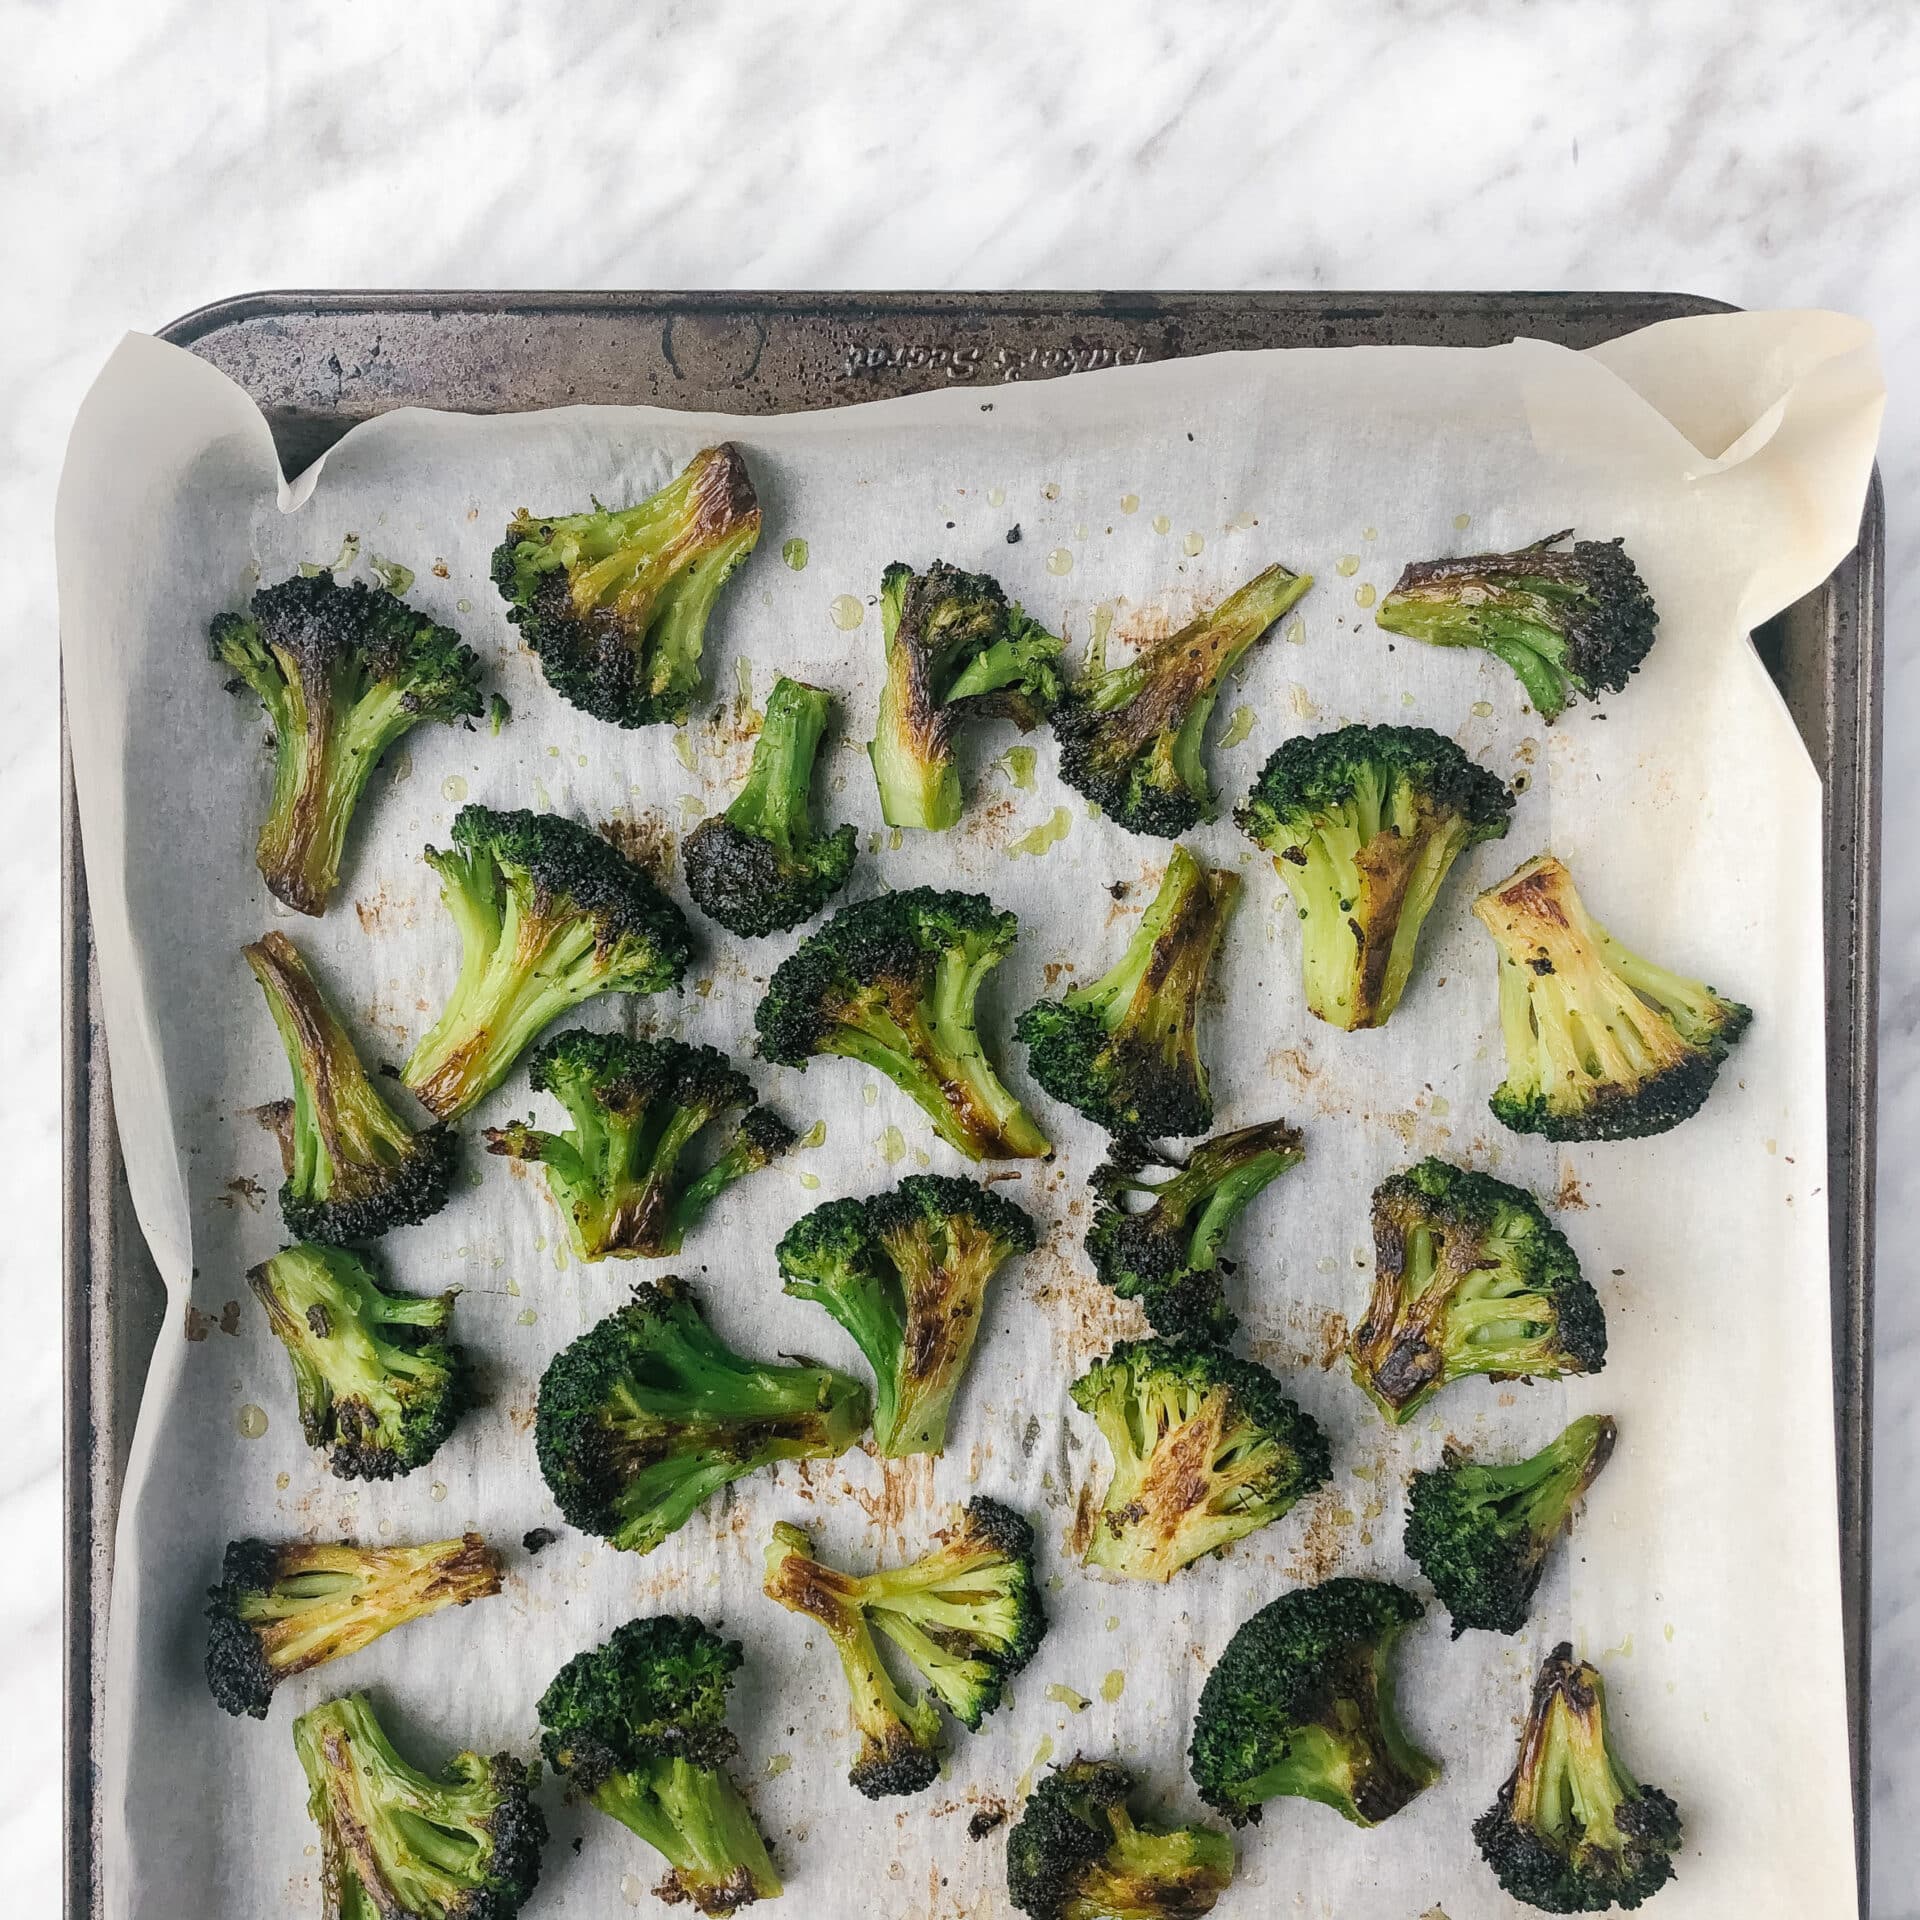 Crispy roasted frozen broccoli on a sheet pan